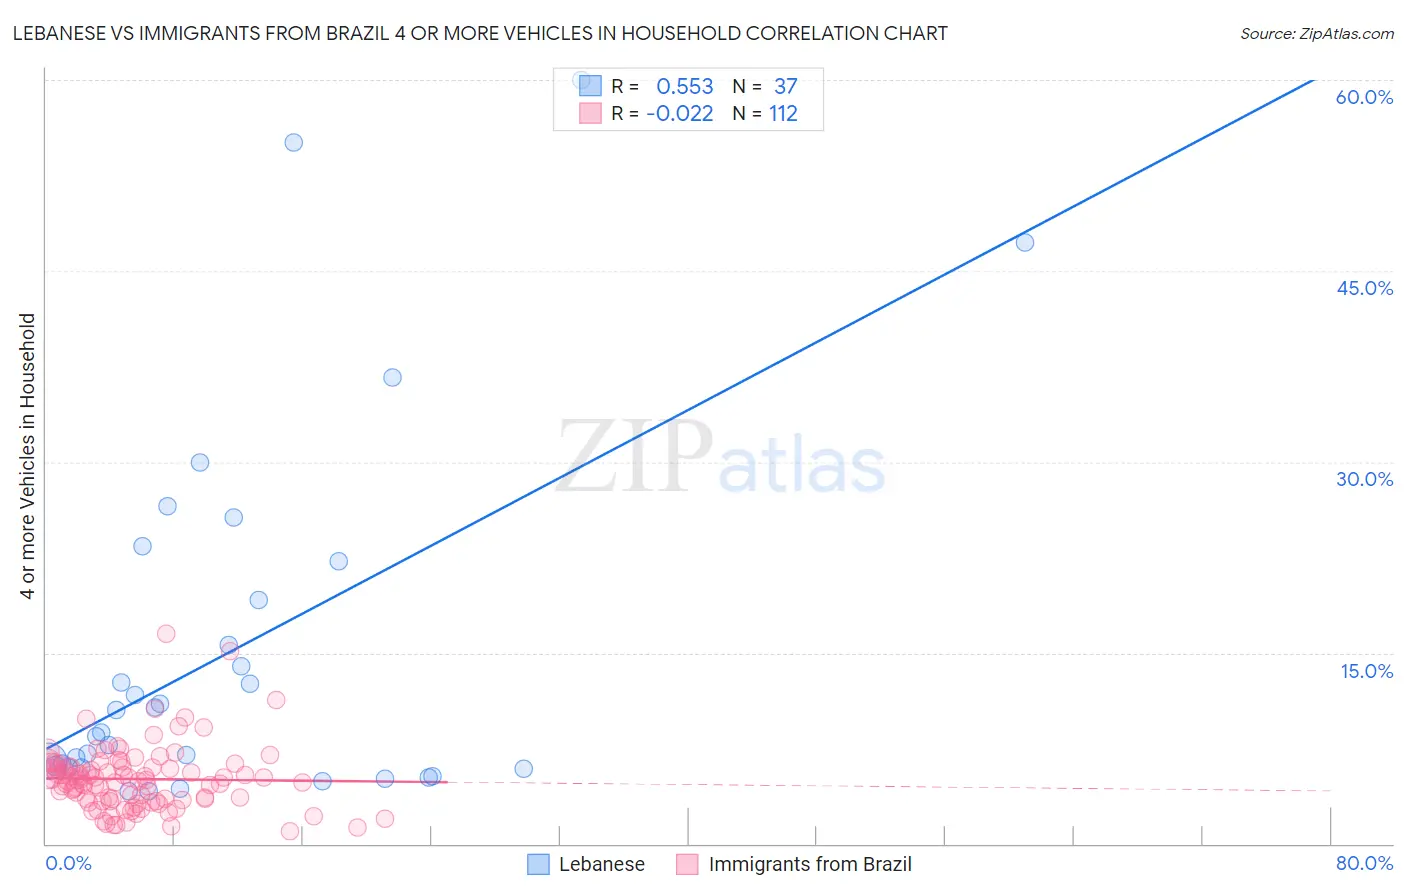 Lebanese vs Immigrants from Brazil 4 or more Vehicles in Household